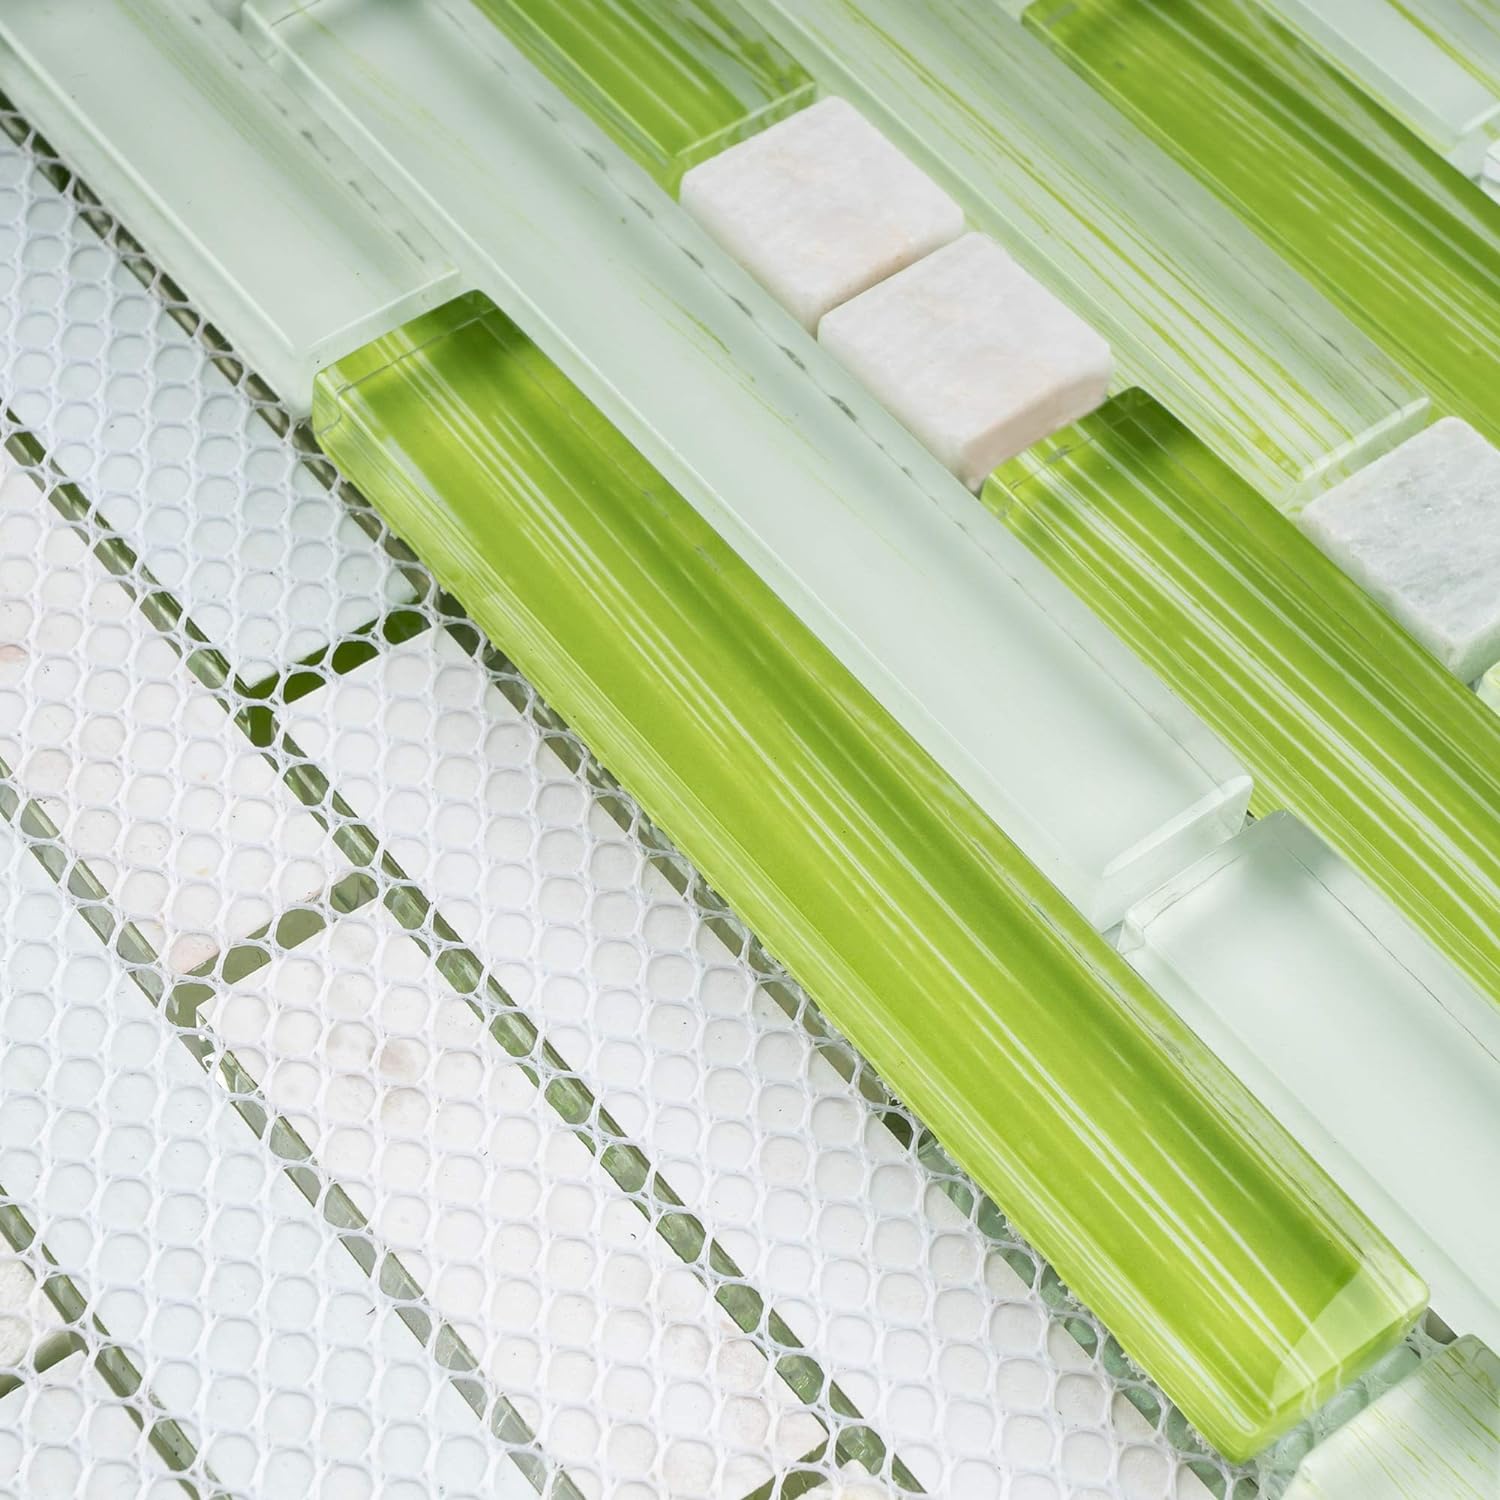 TNLQG-04 Apple Green Glass Stripe Floral Mosaic Wall Tile -Kitchen and Bath backsplash